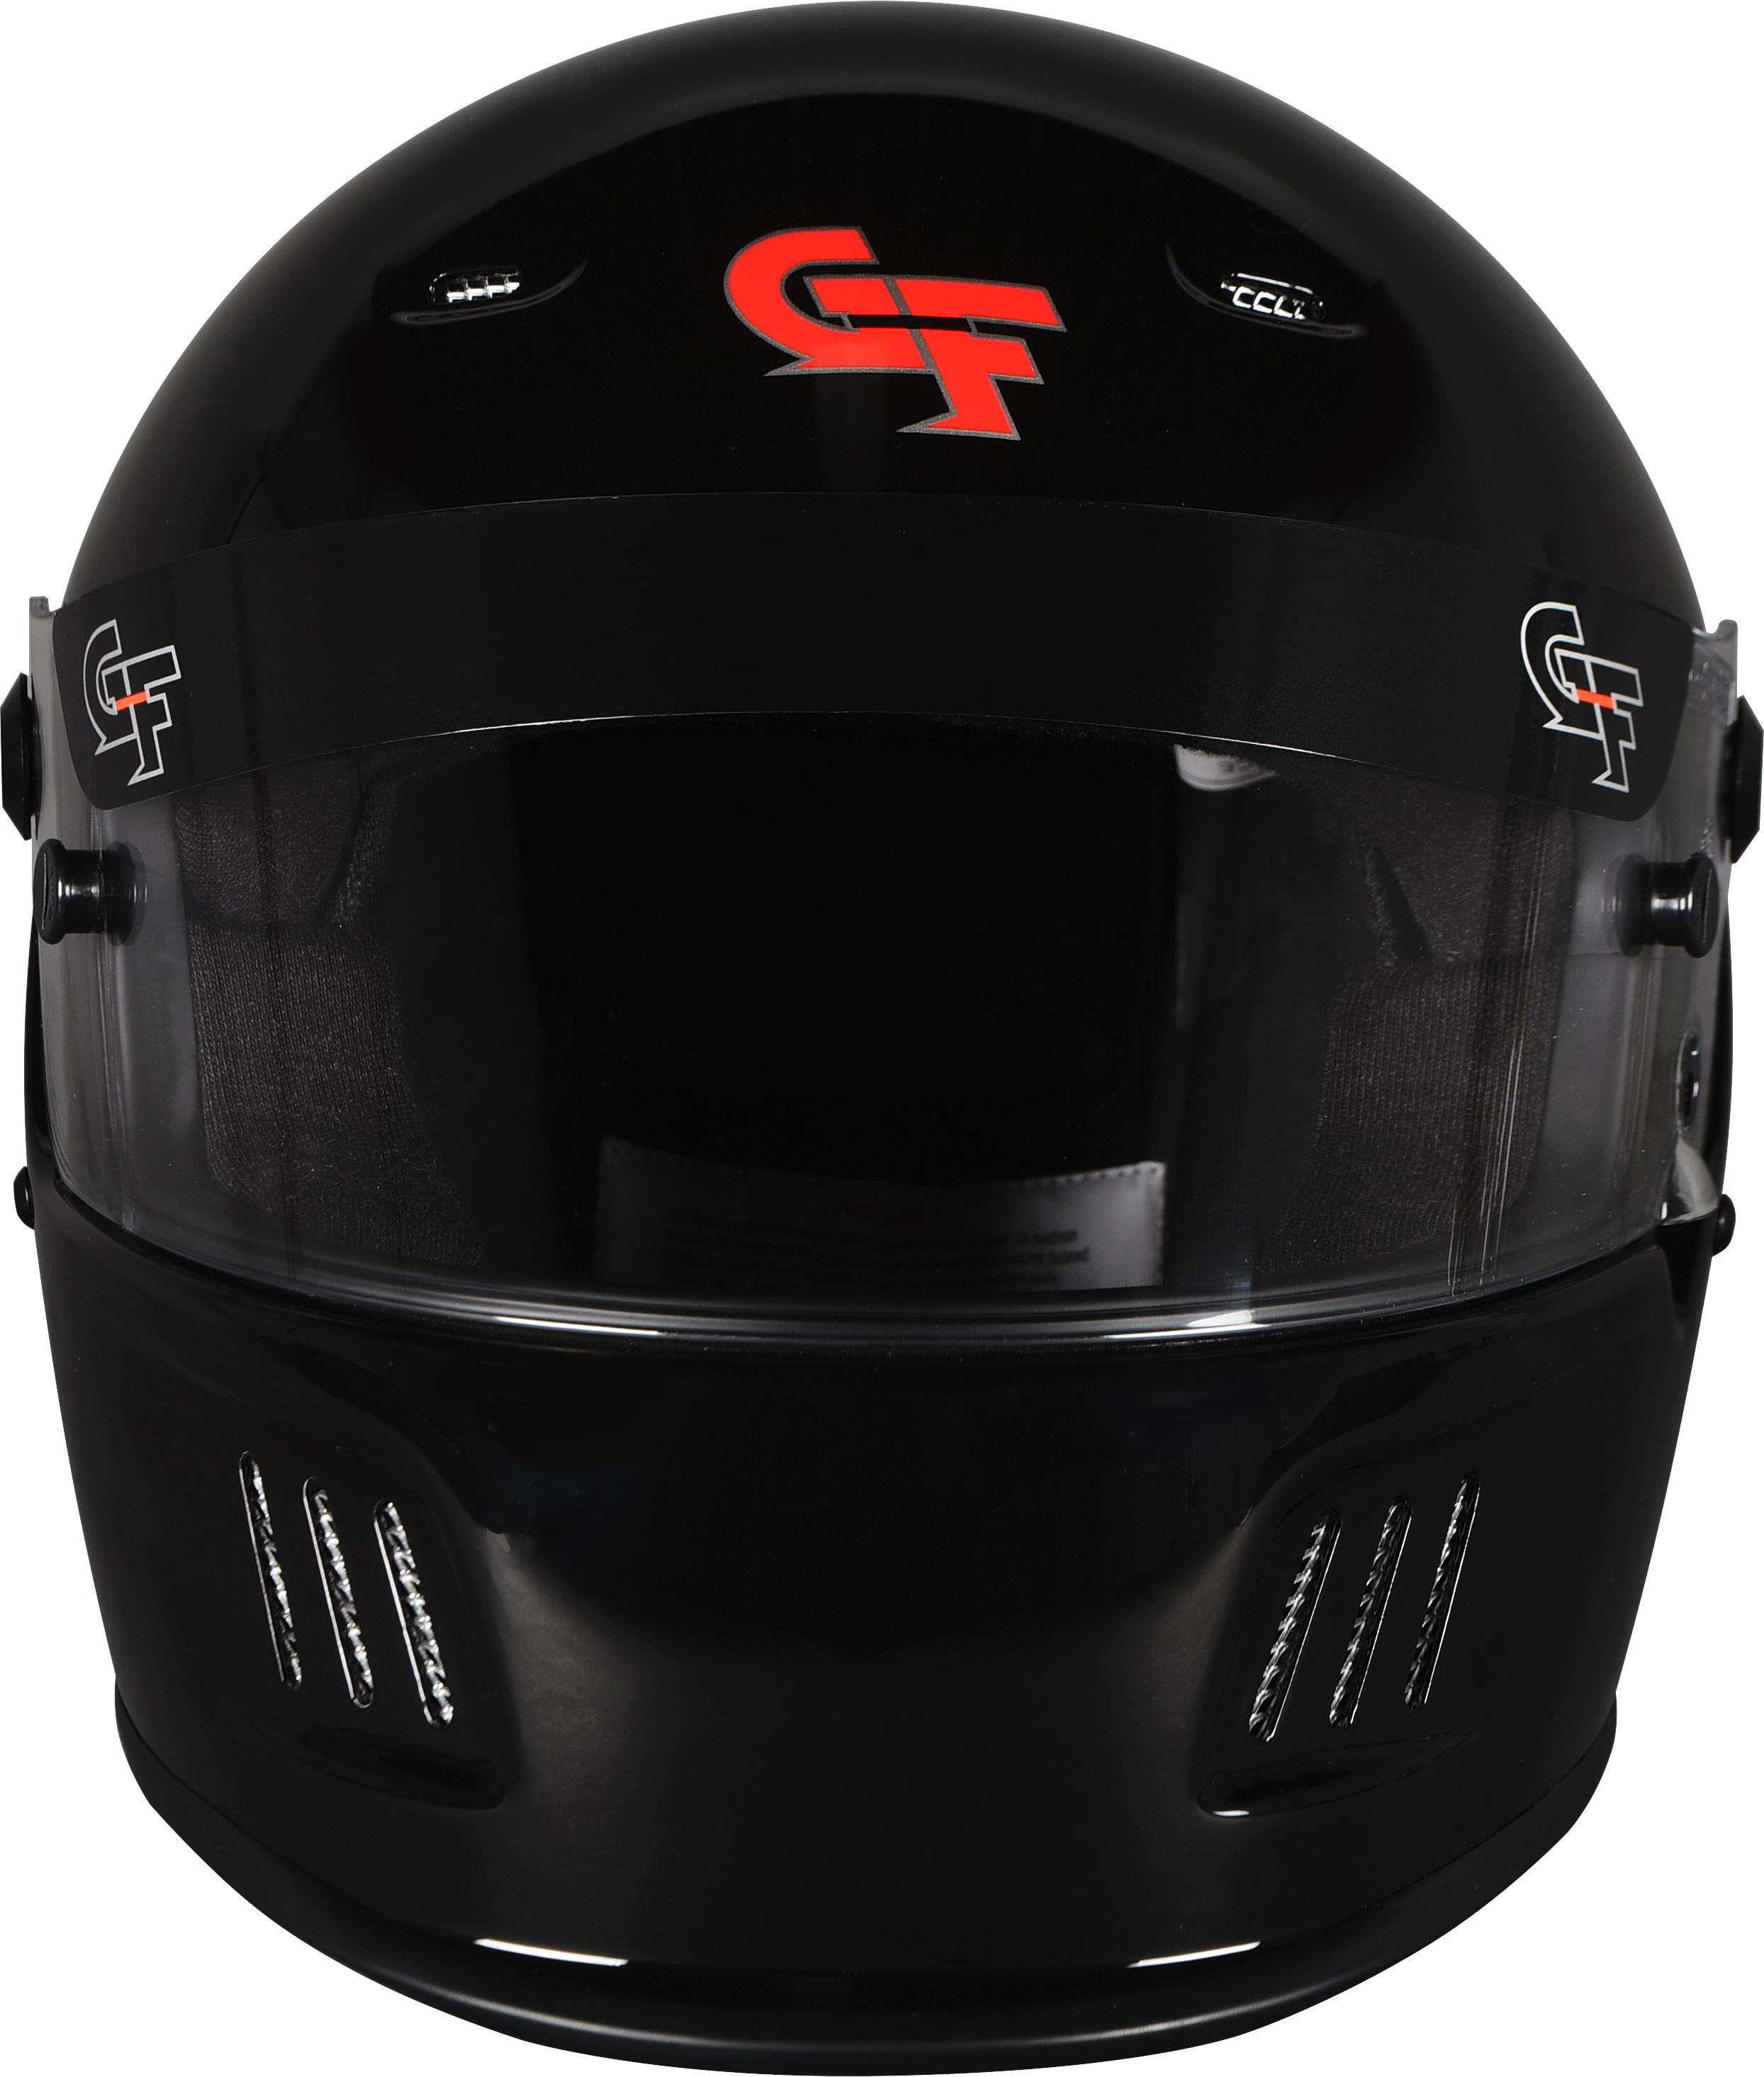 Helmet G-FORCE Racing Gear